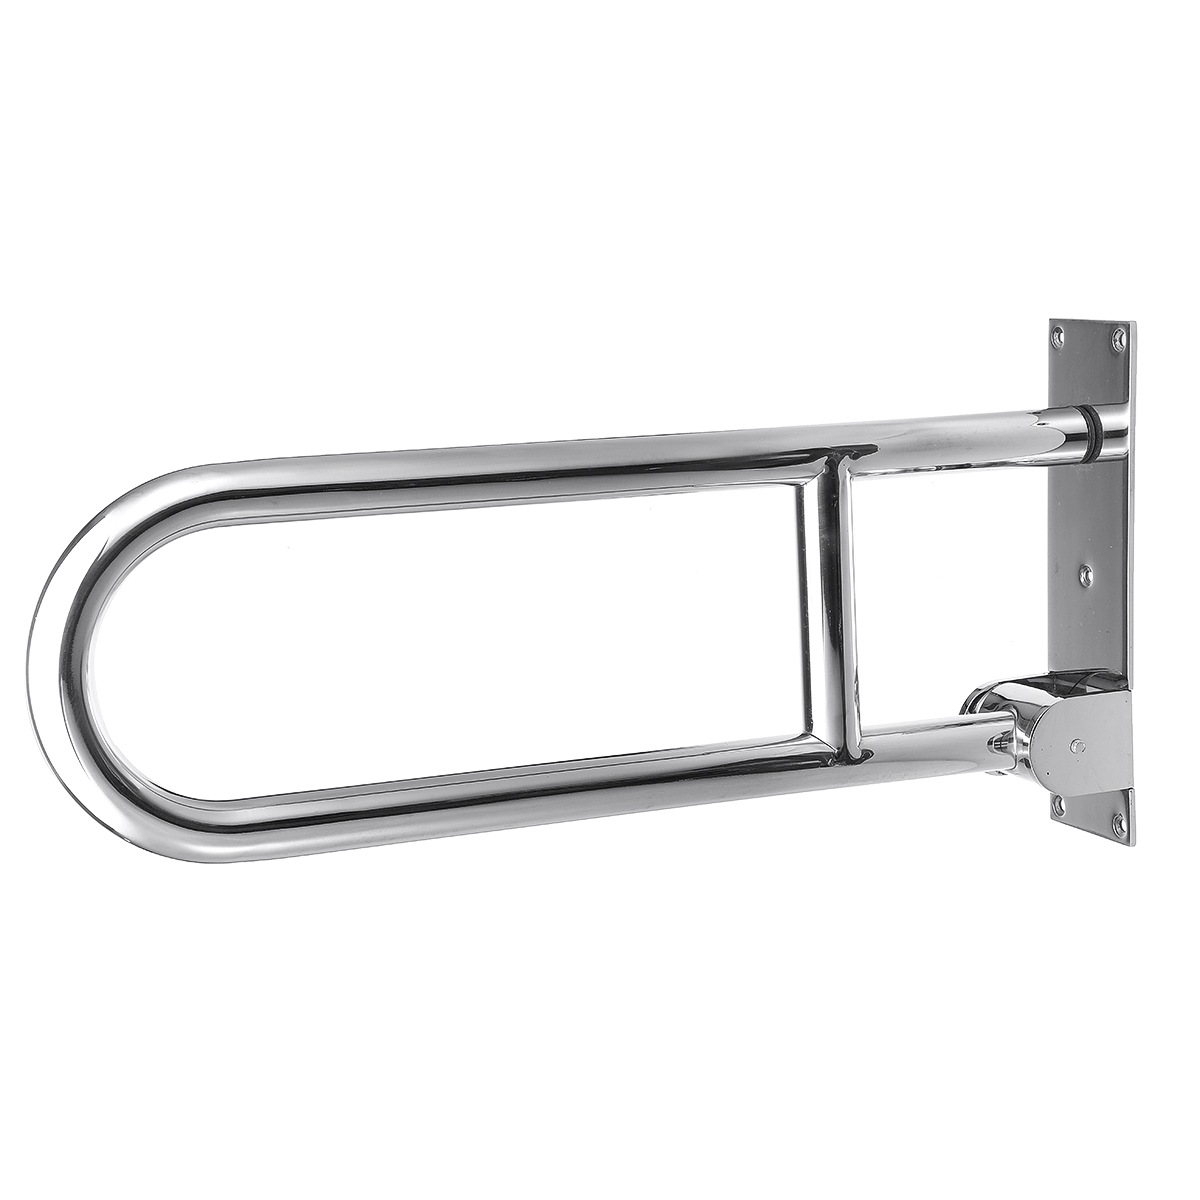 Stainless-Steel-Toilet-Safety-Frame-Rail-Grab-Bar-Handicap-Bathroom-Hand-Grips-1650108